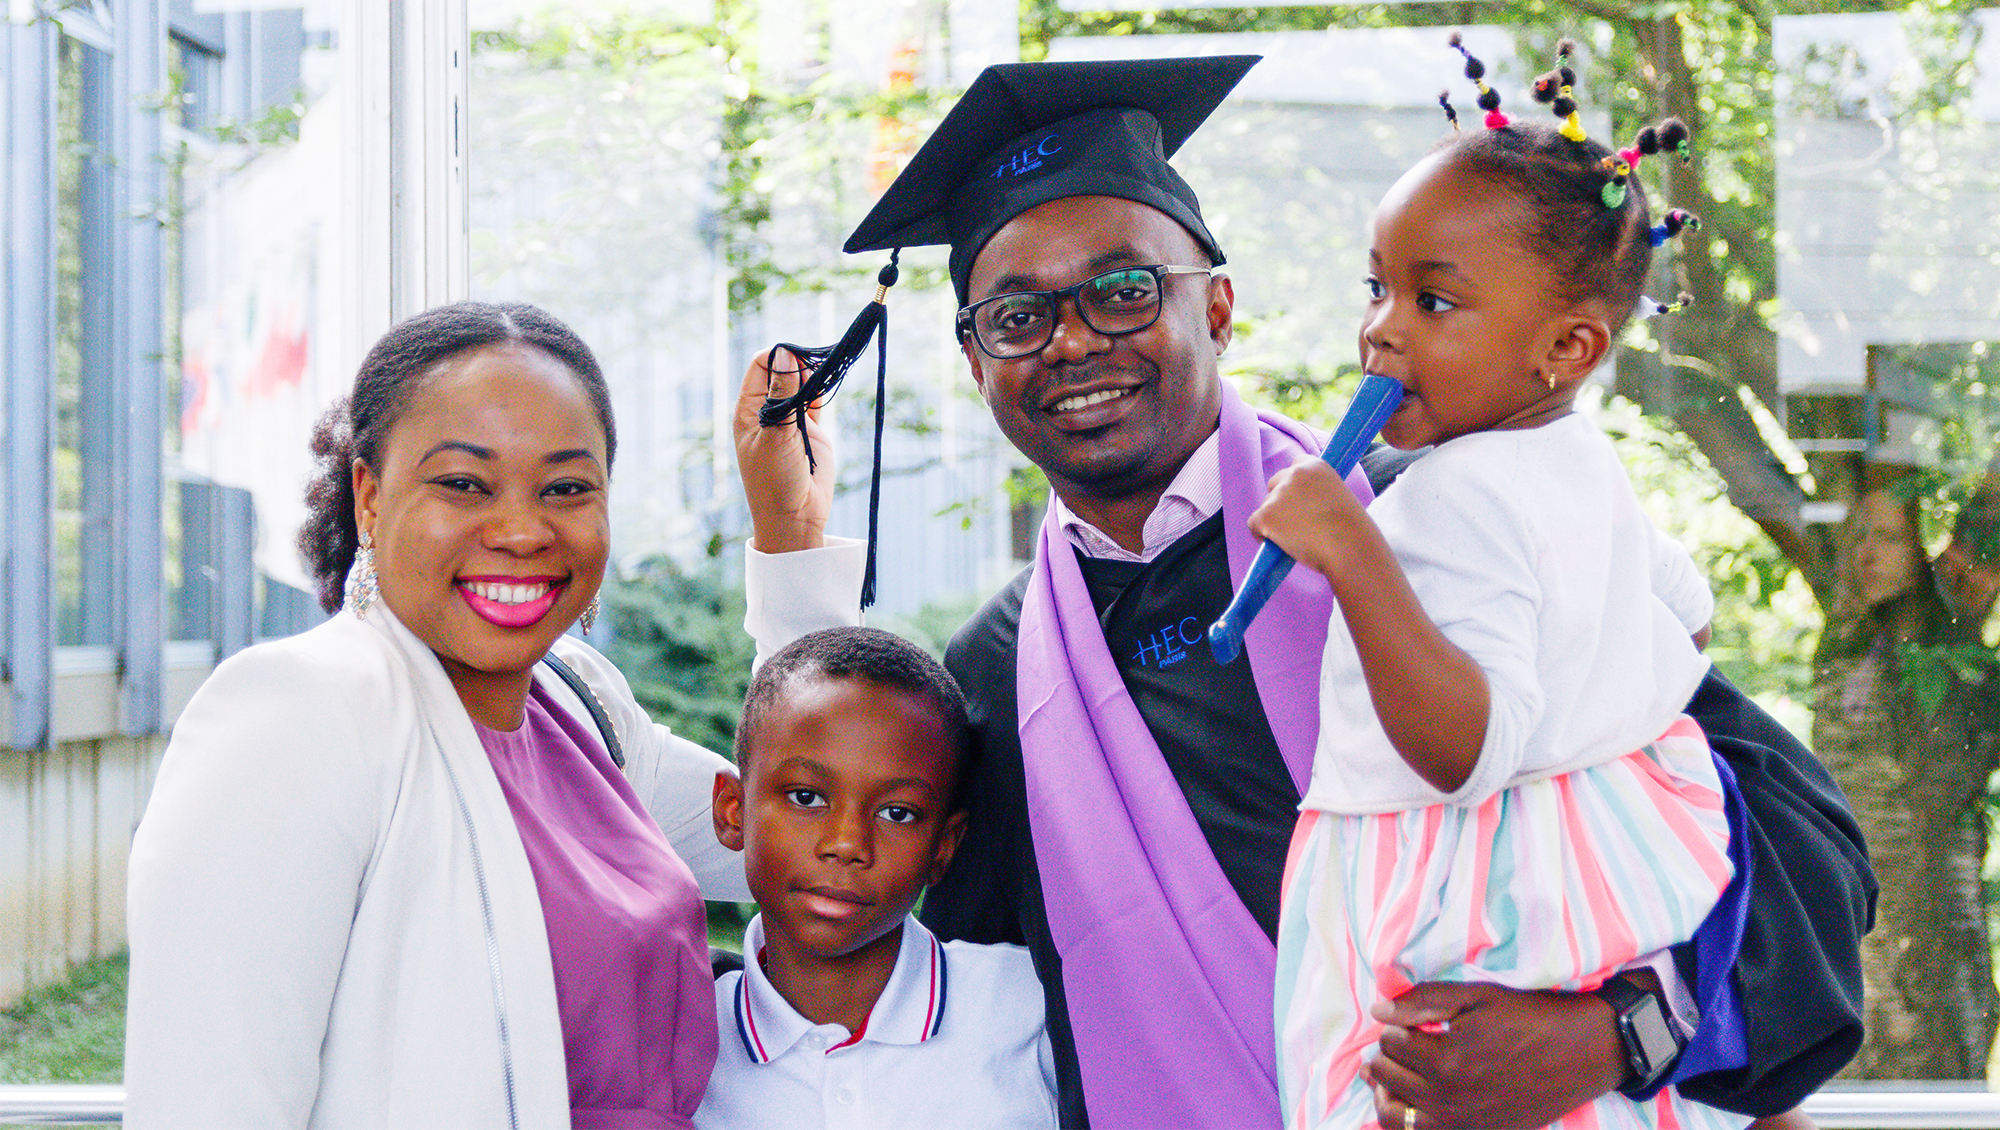 Graduating from HEC Paris is a family affair